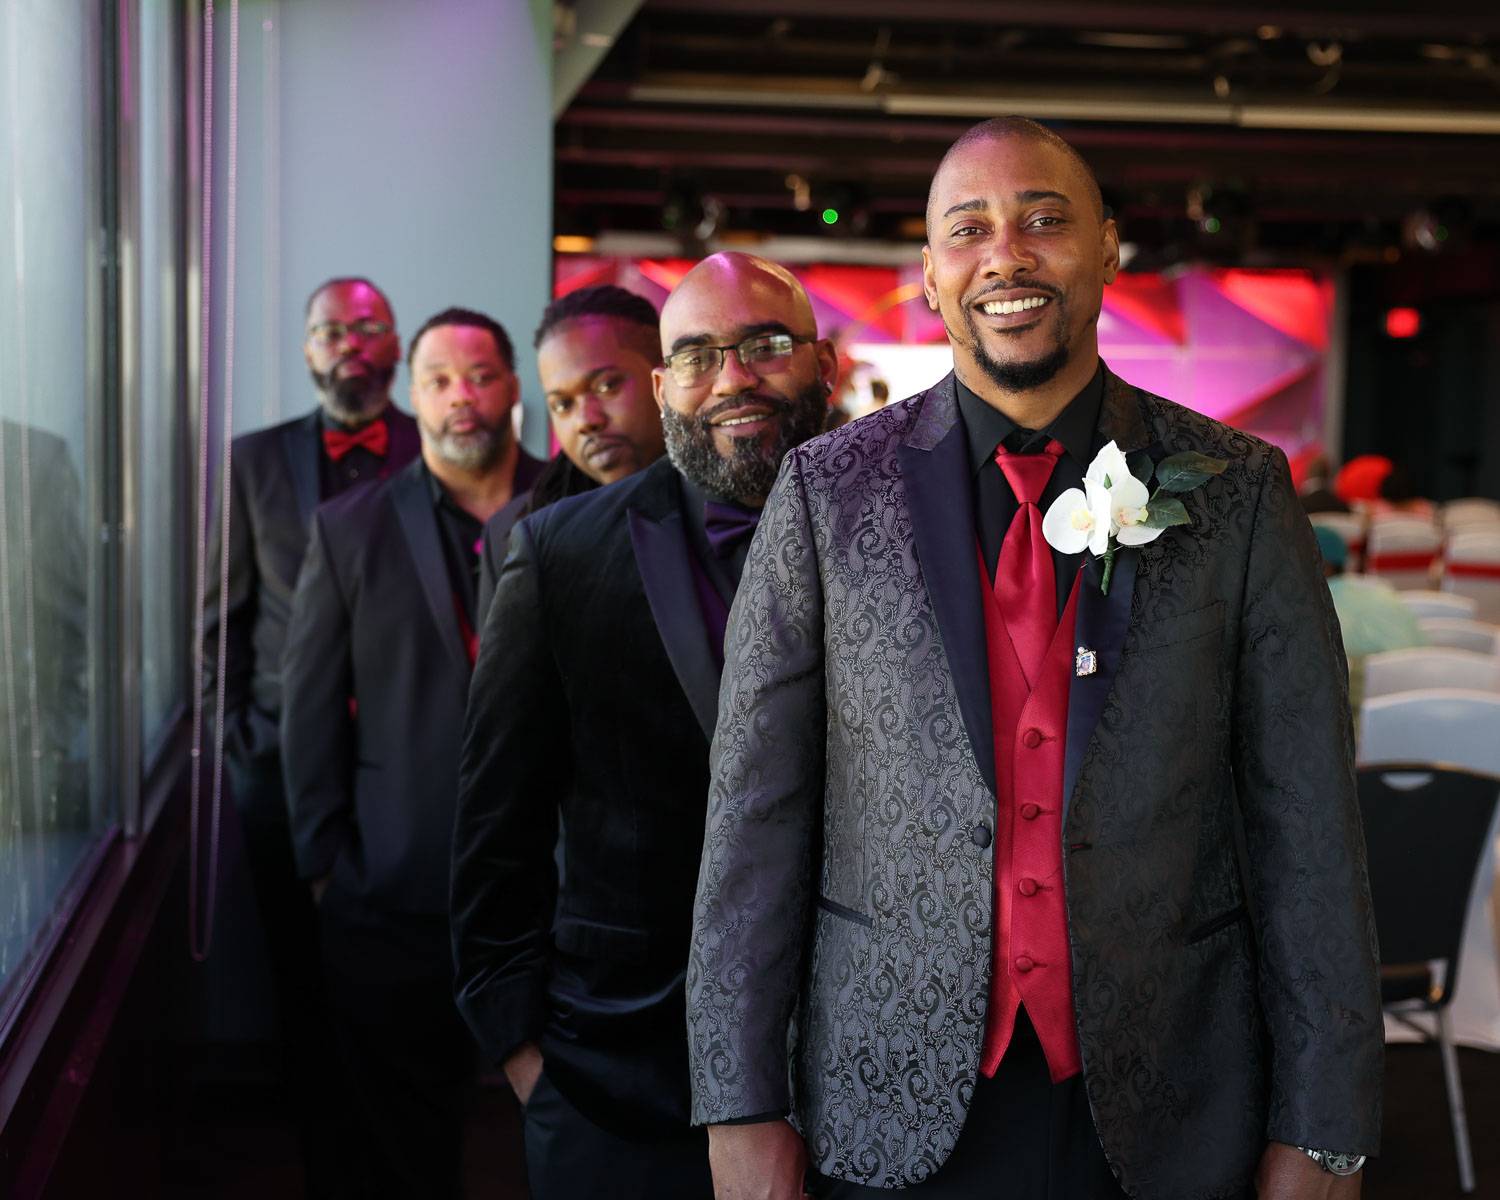 The groom smiles with his groomsmen behind him